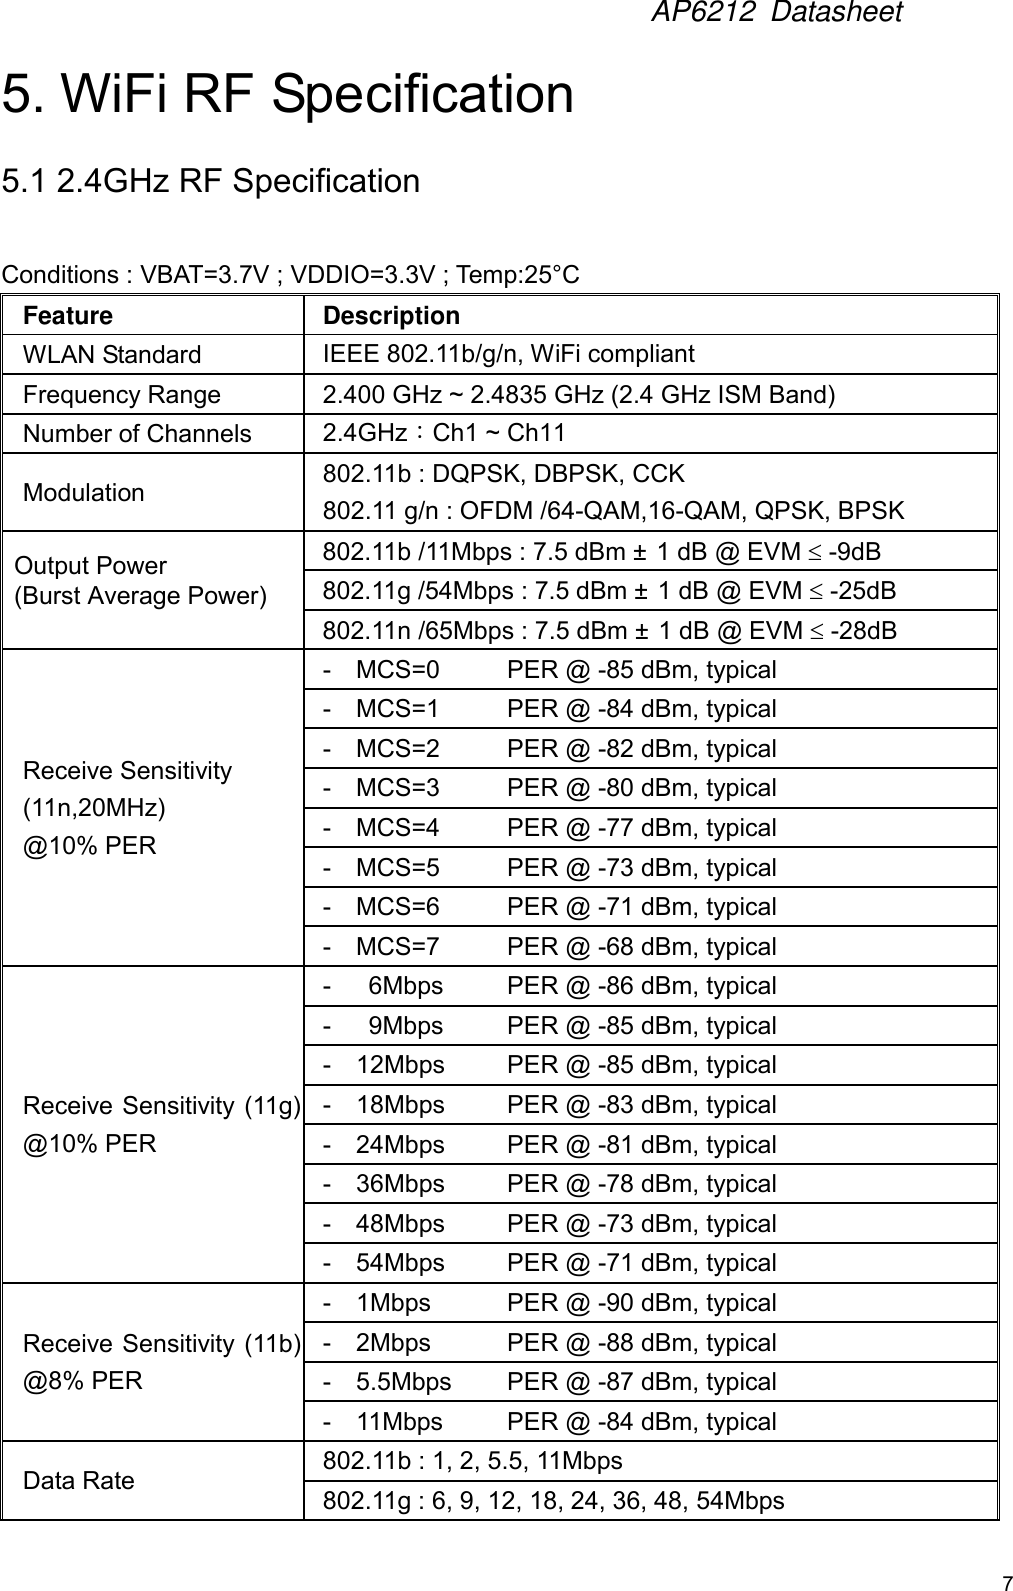 AP6212  Datasheet7 5. WiFi RF Specification5.1 2.4GHz RF Specification Conditions : VBAT=3.7V ; VDDIO=3.3V ; Temp:25°CFeature Description WLAN Standard IEEE 802.11b/g/n, WiFi compliant Frequency Range 2.400 GHz ~ 2.4835 GHz (2.4 GHz ISM Band)Number of Channels 2.4GHz：Ch1 ~ Ch11Modulation 802.11b : DQPSK, DBPSK, CCK 802.11 g/n : OFDM /64-QAM,16-QAM, QPSK, BPSK Output Power(Burst Average Power)802.11b /11Mbps : 7.5 dBm ± 1 dB @ EVM  -9dB802.11g /54Mbps : 7.5 dBm ± 1 dB @ EVM  -25dB802.11n /65Mbps : 7.5 dBm ± 1 dB @ EVM  -28dBReceive Sensitivity (11n,20MHz)   @10% PER - MCS=0 PER @ -85 dBm, typical - MCS=1 PER @ -84 dBm, typical - MCS=2 PER @ -82 dBm, typical - MCS=3 PER @ -80 dBm, typical - MCS=4 PER @ -77 dBm, typical - MCS=5 PER @ -73 dBm, typical - MCS=6 PER @ -71 dBm, typical - MCS=7 PER @ -68 dBm, typical Receive Sensitivity (11g) @10% PER - 6Mbps PER @ -86 dBm, typical - 9Mbps PER @ -85 dBm, typical - 12Mbps PER @ -85 dBm, typical - 18Mbps PER @ -83 dBm, typical - 24Mbps PER @ -81 dBm, typical - 36Mbps PER @ -78 dBm, typical - 48Mbps PER @ -73 dBm, typical - 54Mbps PER @ -71 dBm, typical Receive Sensitivity (11b) @8% PER - 1Mbps PER @ -90 dBm, typical - 2Mbps PER @ -88 dBm, typical - 5.5Mbps PER @ -87 dBm, typical - 11Mbps PER @ -84 dBm, typical Data Rate 802.11b : 1, 2, 5.5, 11Mbps 802.11g : 6, 9, 12, 18, 24, 36, 48, 54Mbps 